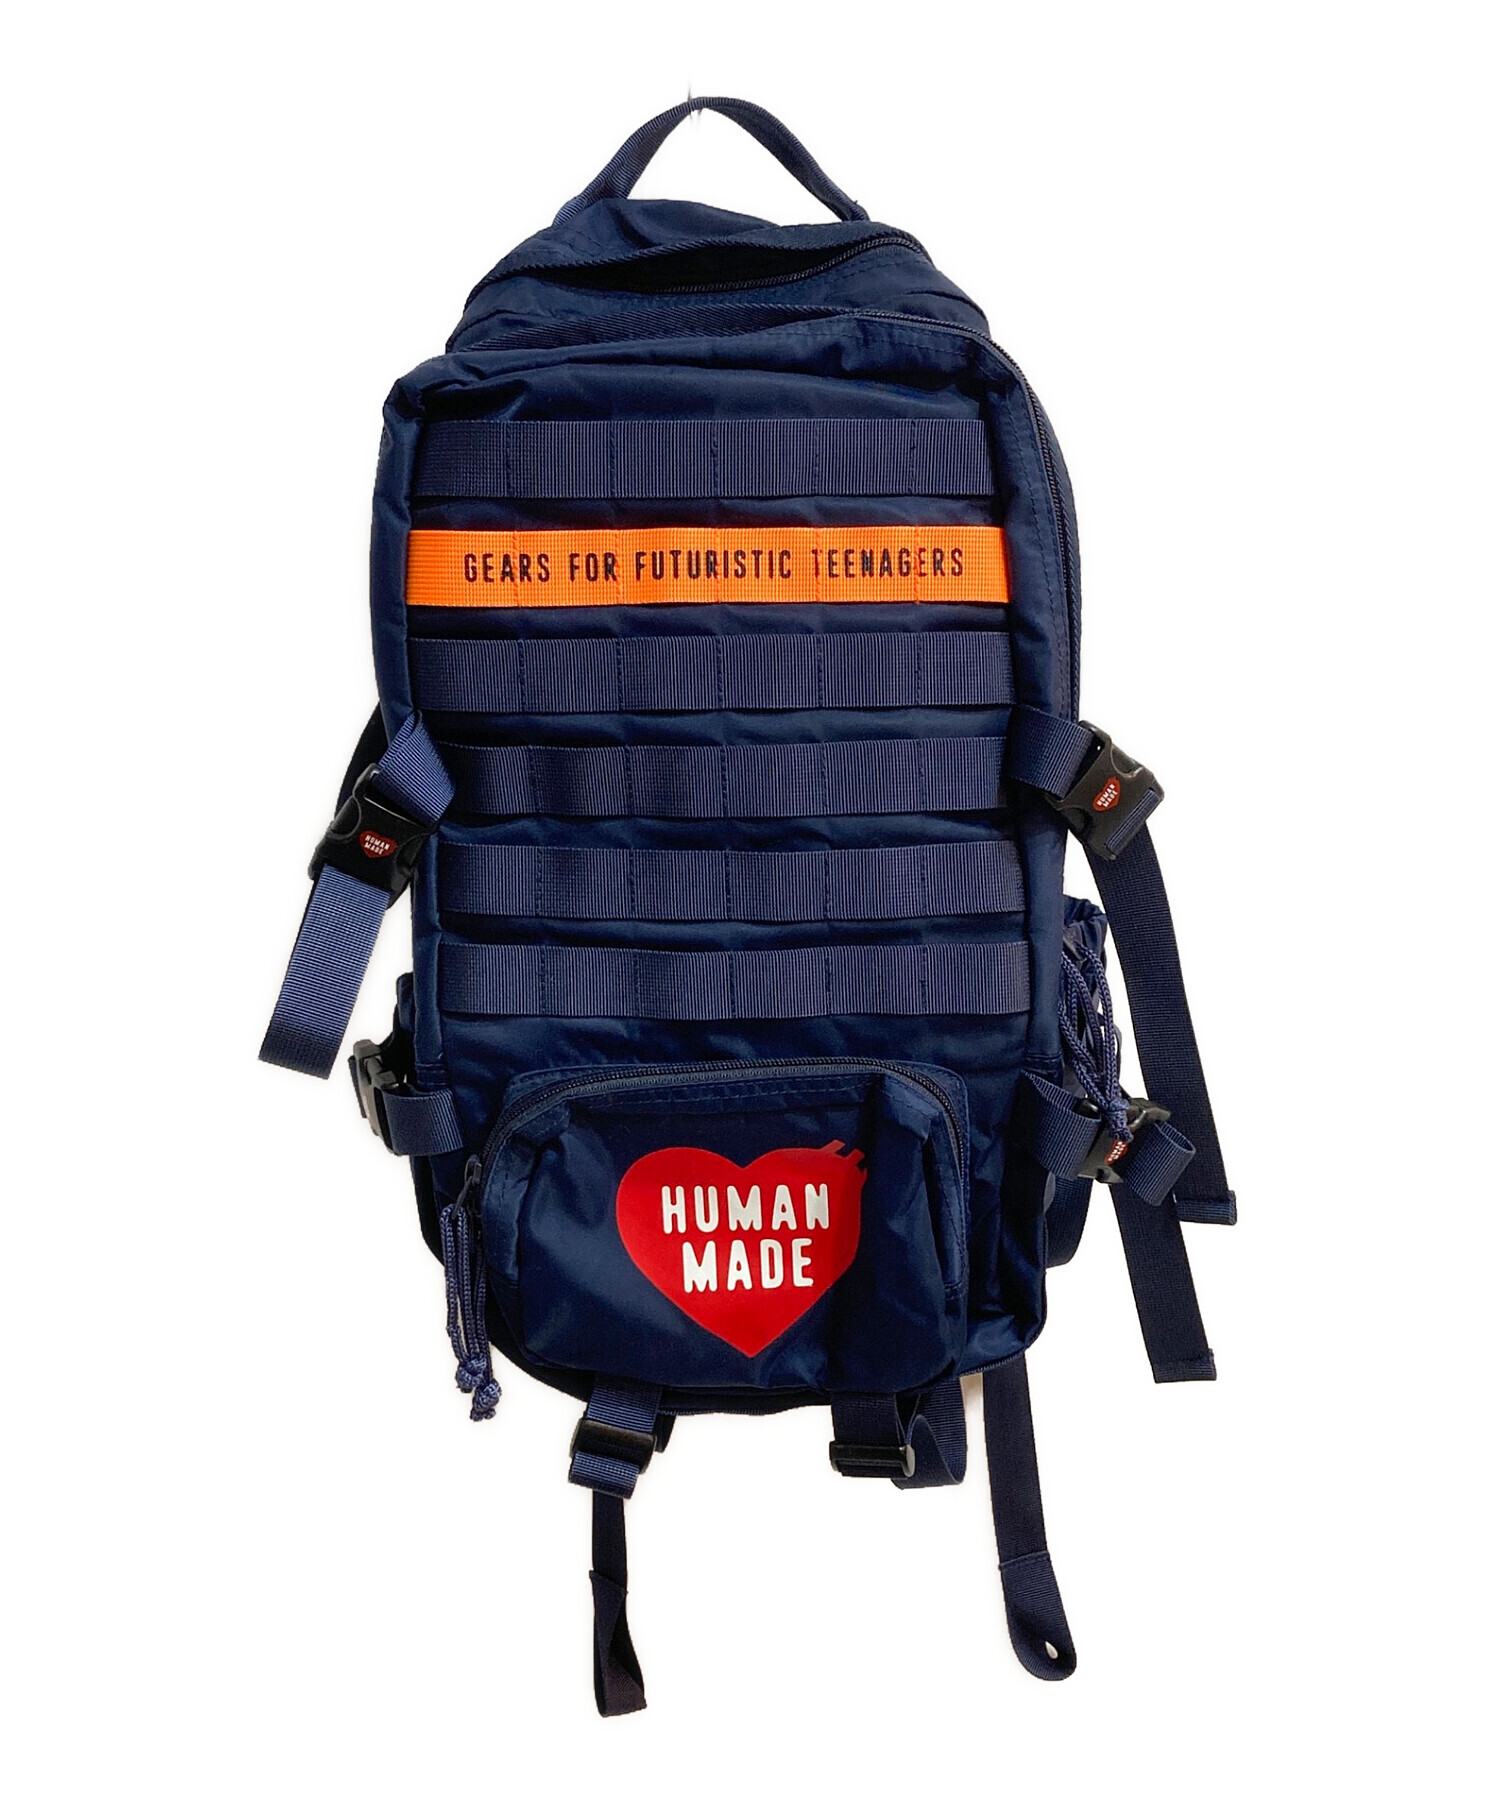 HUMAN MADE (ヒューマンメイド) ミリタリー バックパック military back pack リュック ネイビー